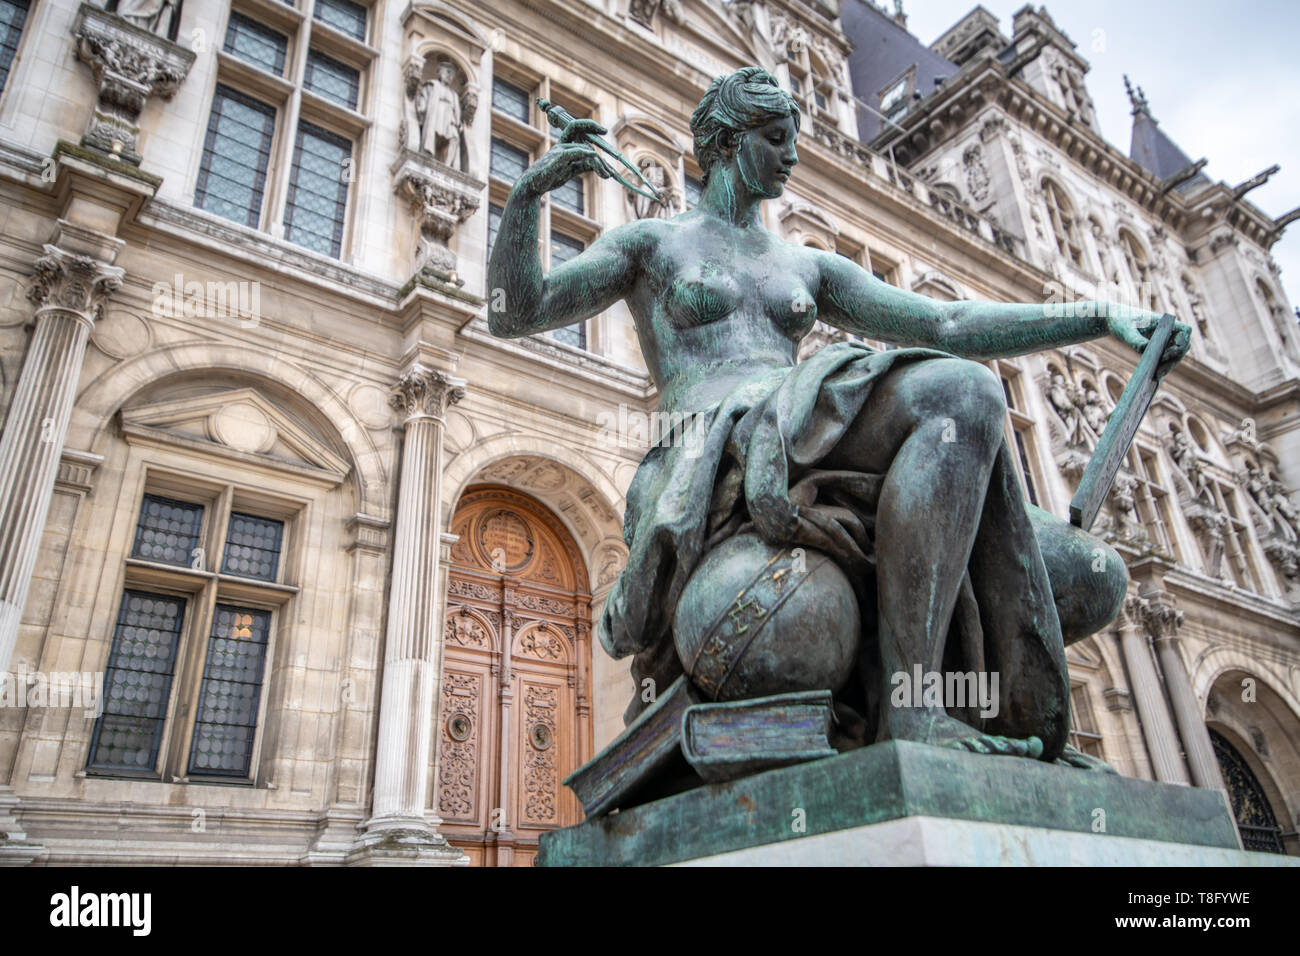 Jules Blanchard 'Science' statue outside the Hotel de Ville - Paris, France Stock Photo